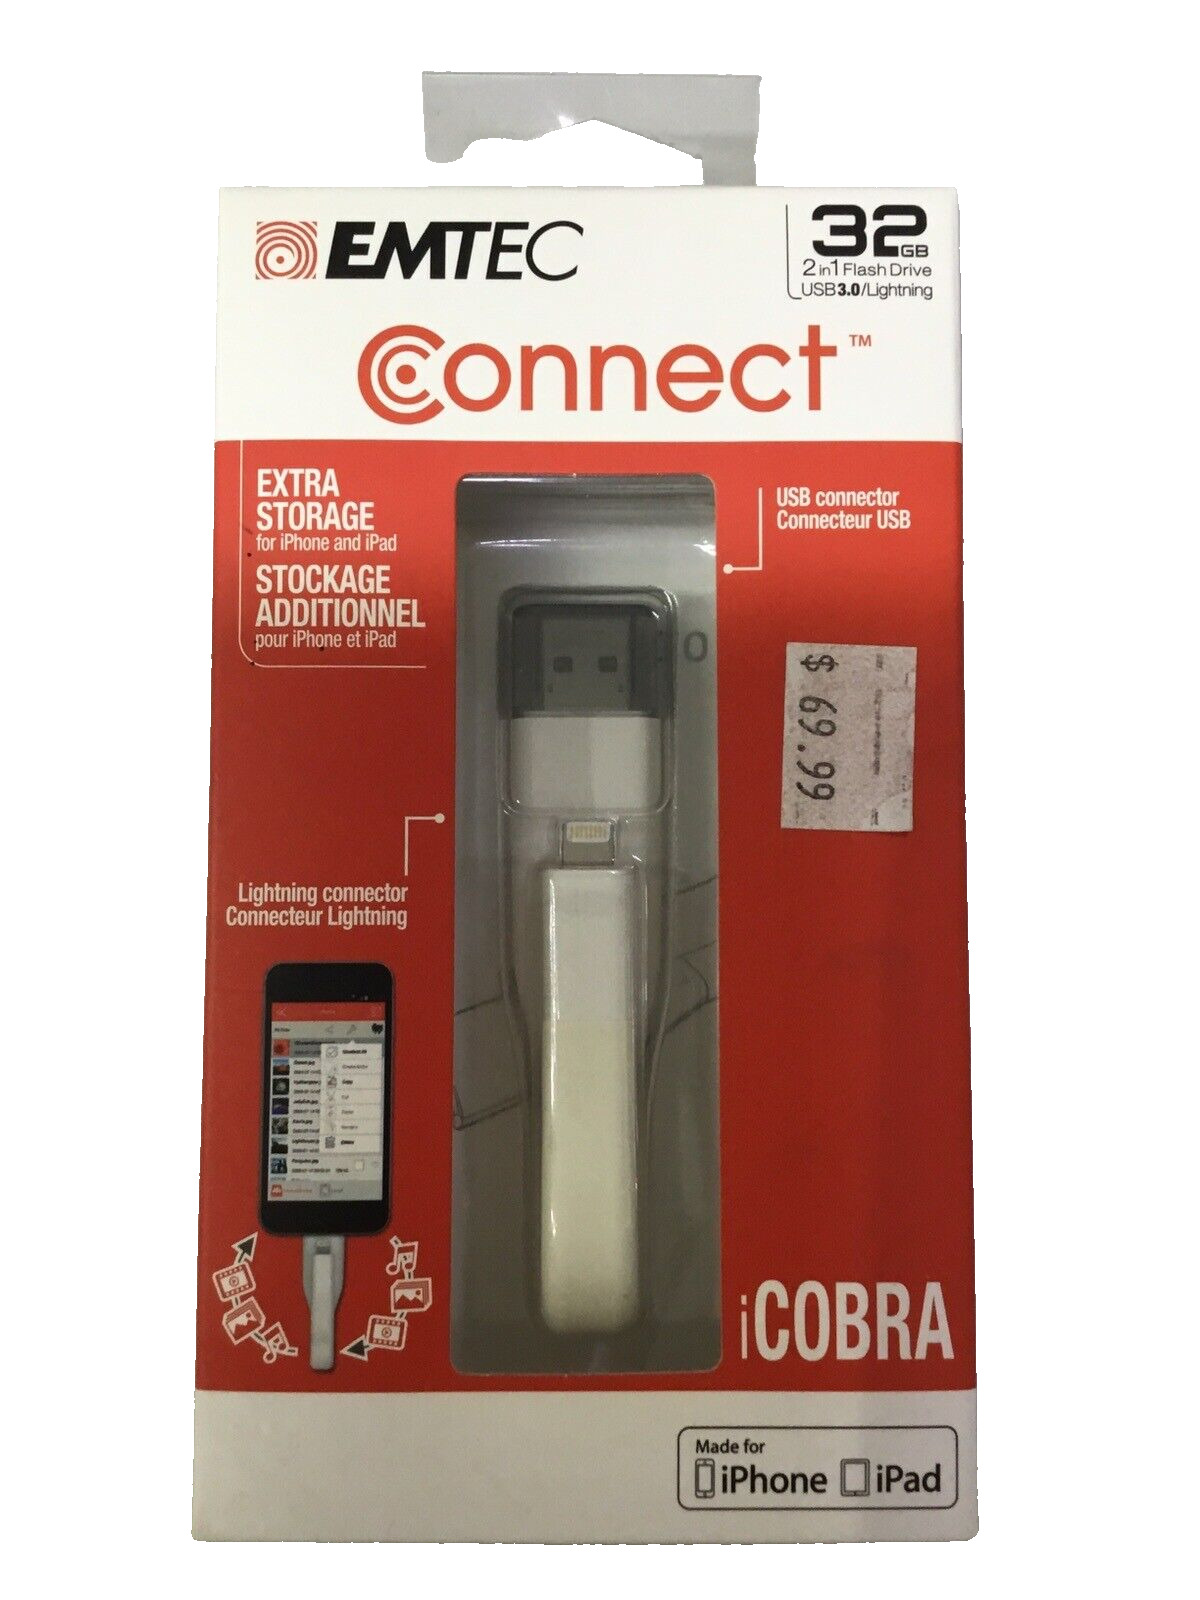 EMTEC Connect - 32GB 2 In 1 Flash Drive NIB